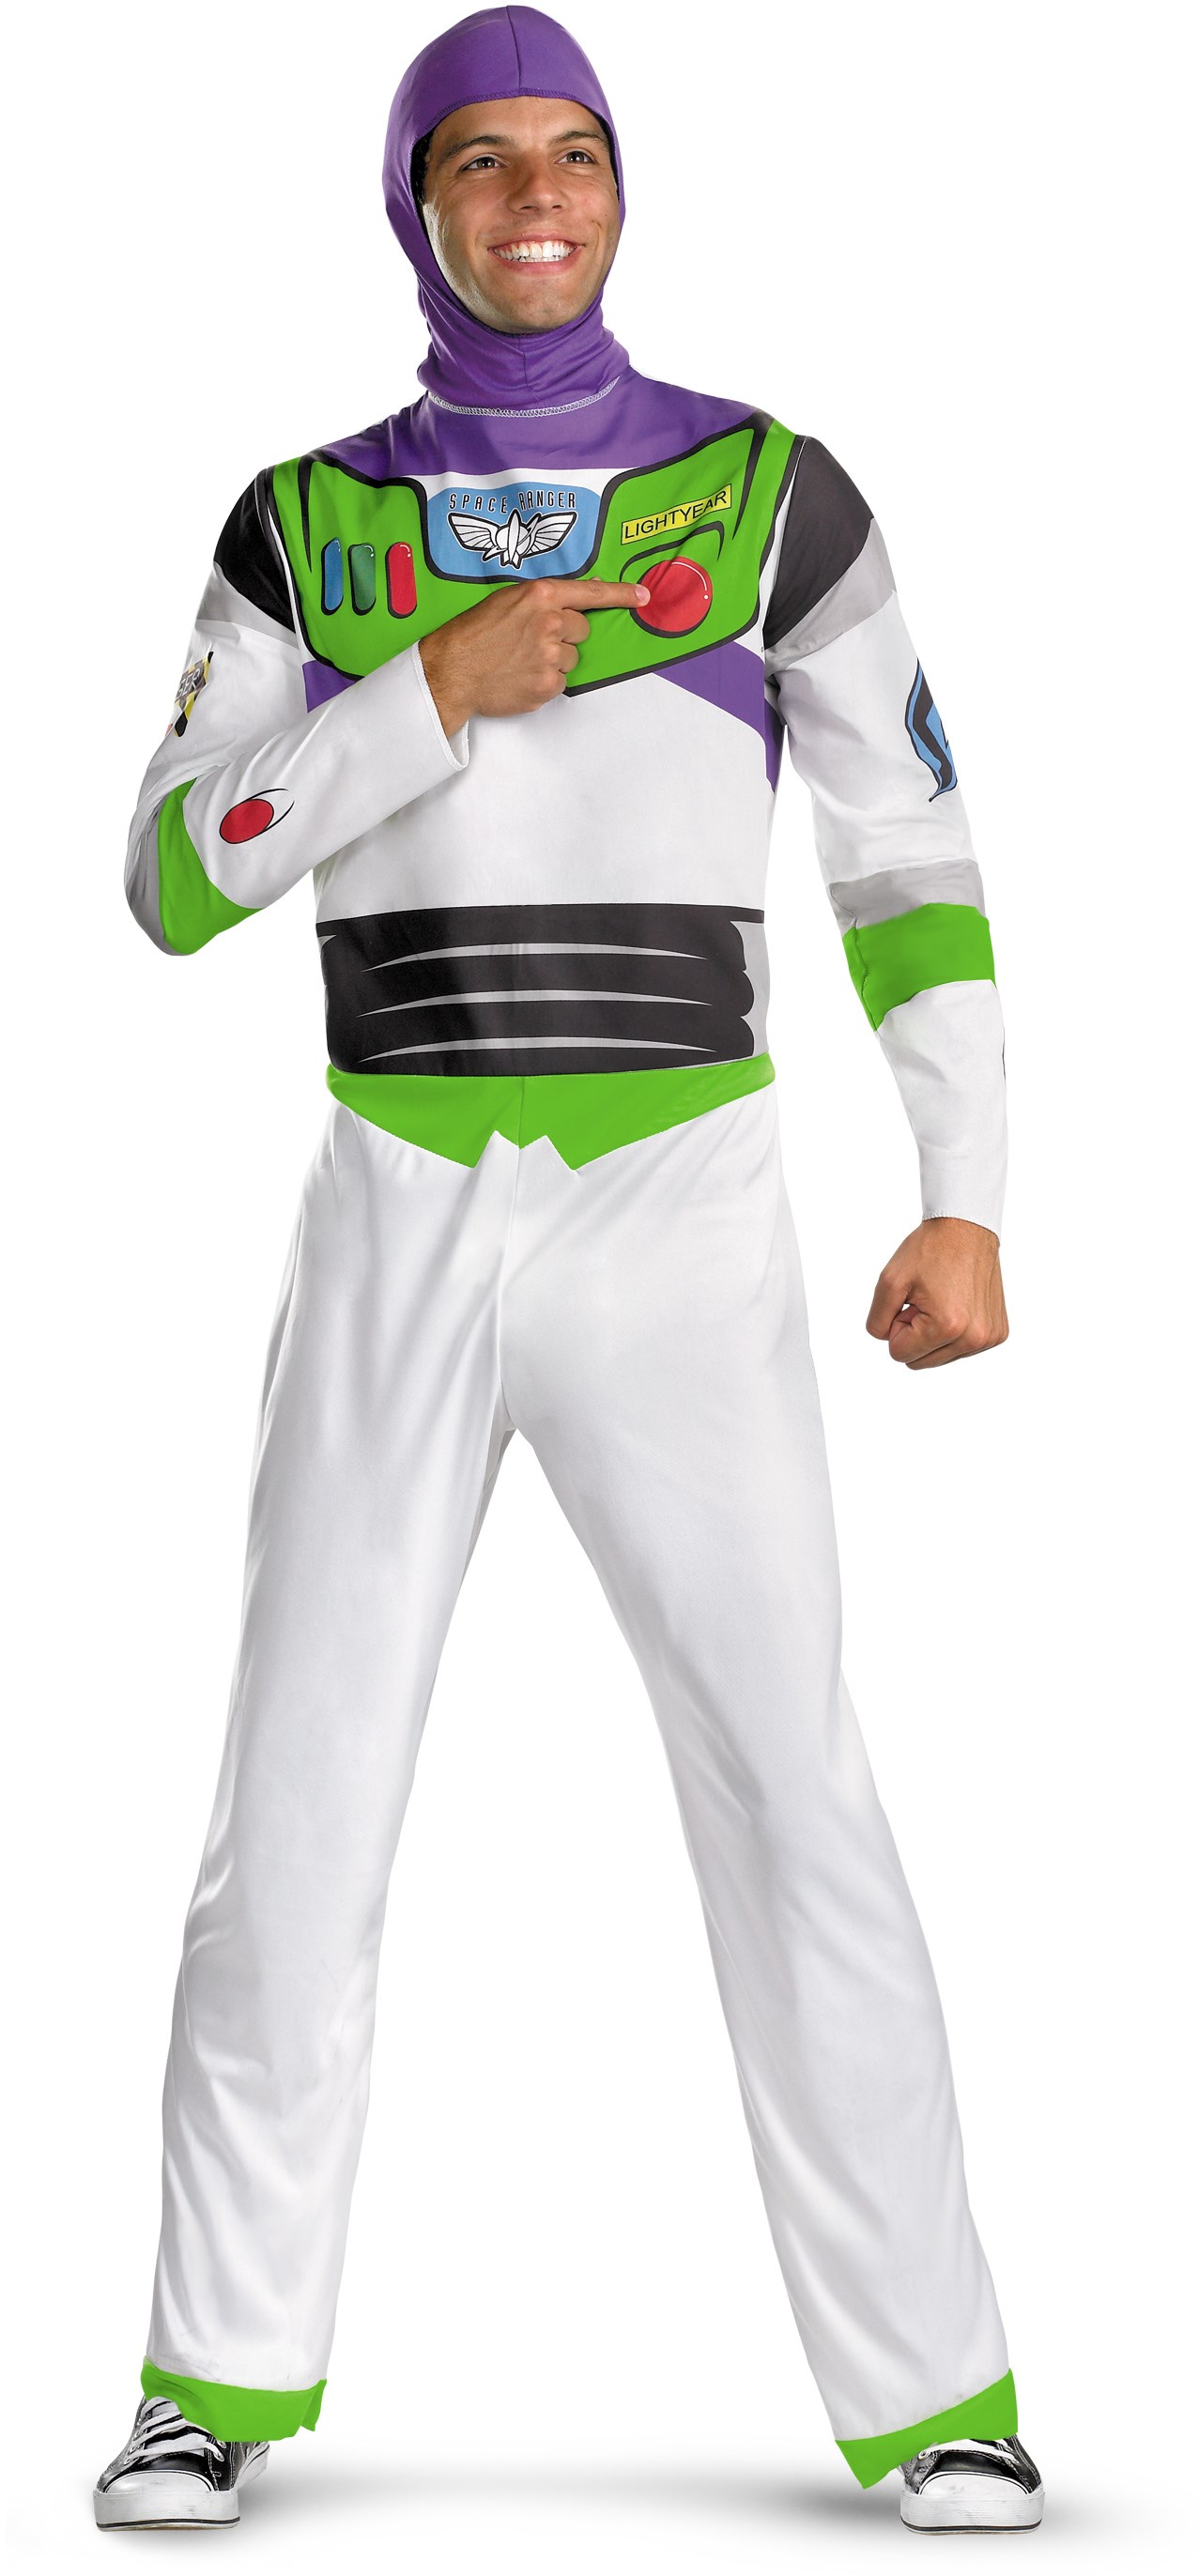 Disney Toy Story - Buzz Lightyear Adult Costume